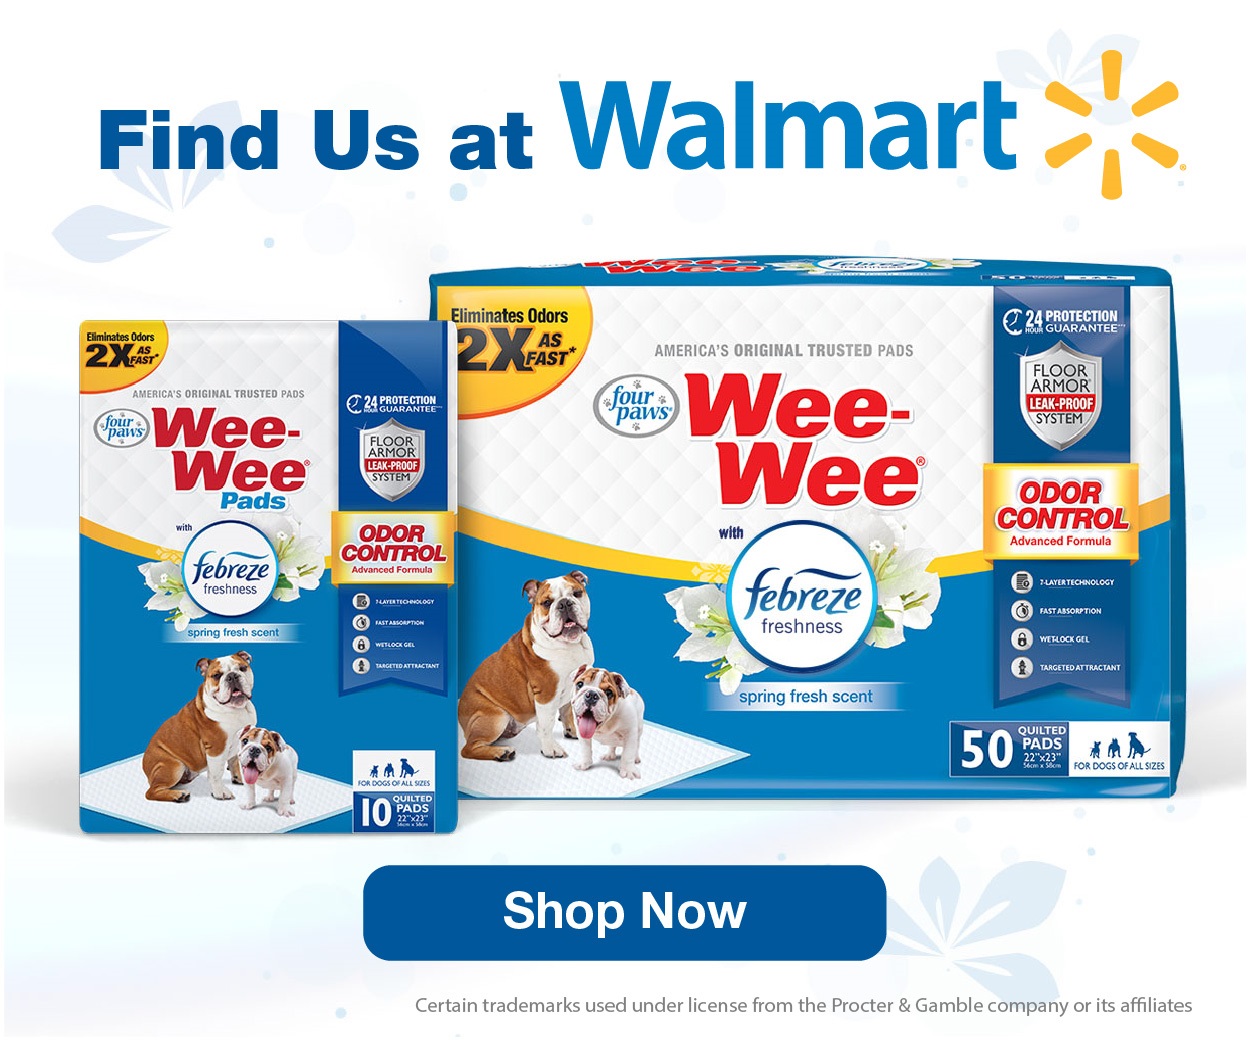 Febreze Wee-Wee Pads at Walmart Banner